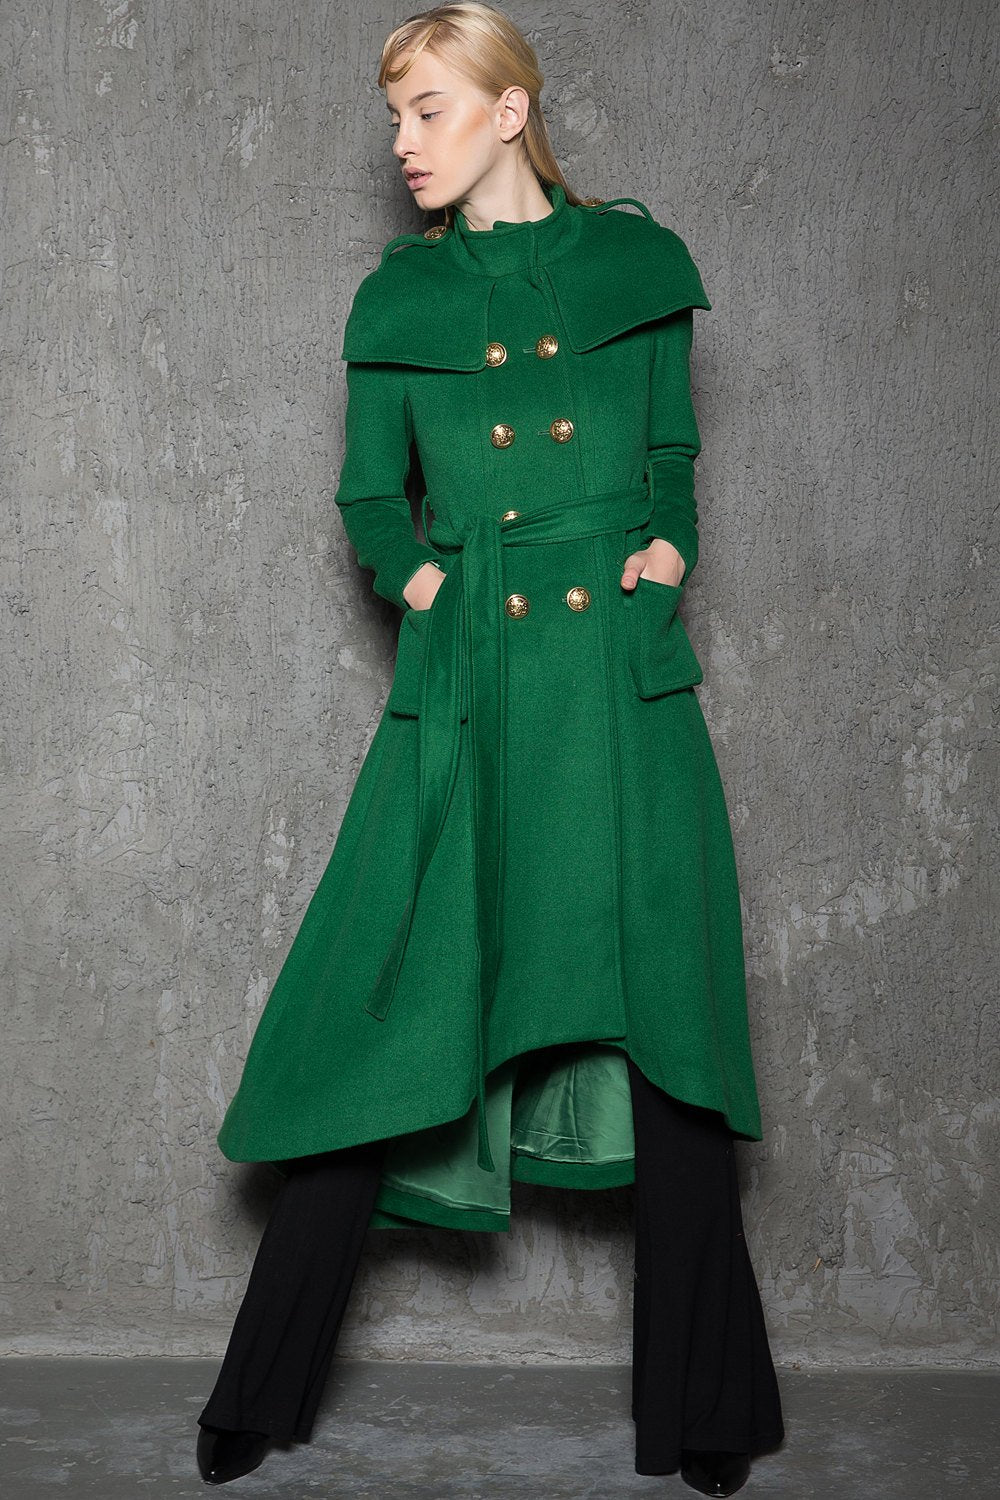 Green Long Coat, Emerald Capelet Coat, Designer Tailored Handmade Double-Breasted Asymmetrical Unique Woman's Coat, Winter Coat C714